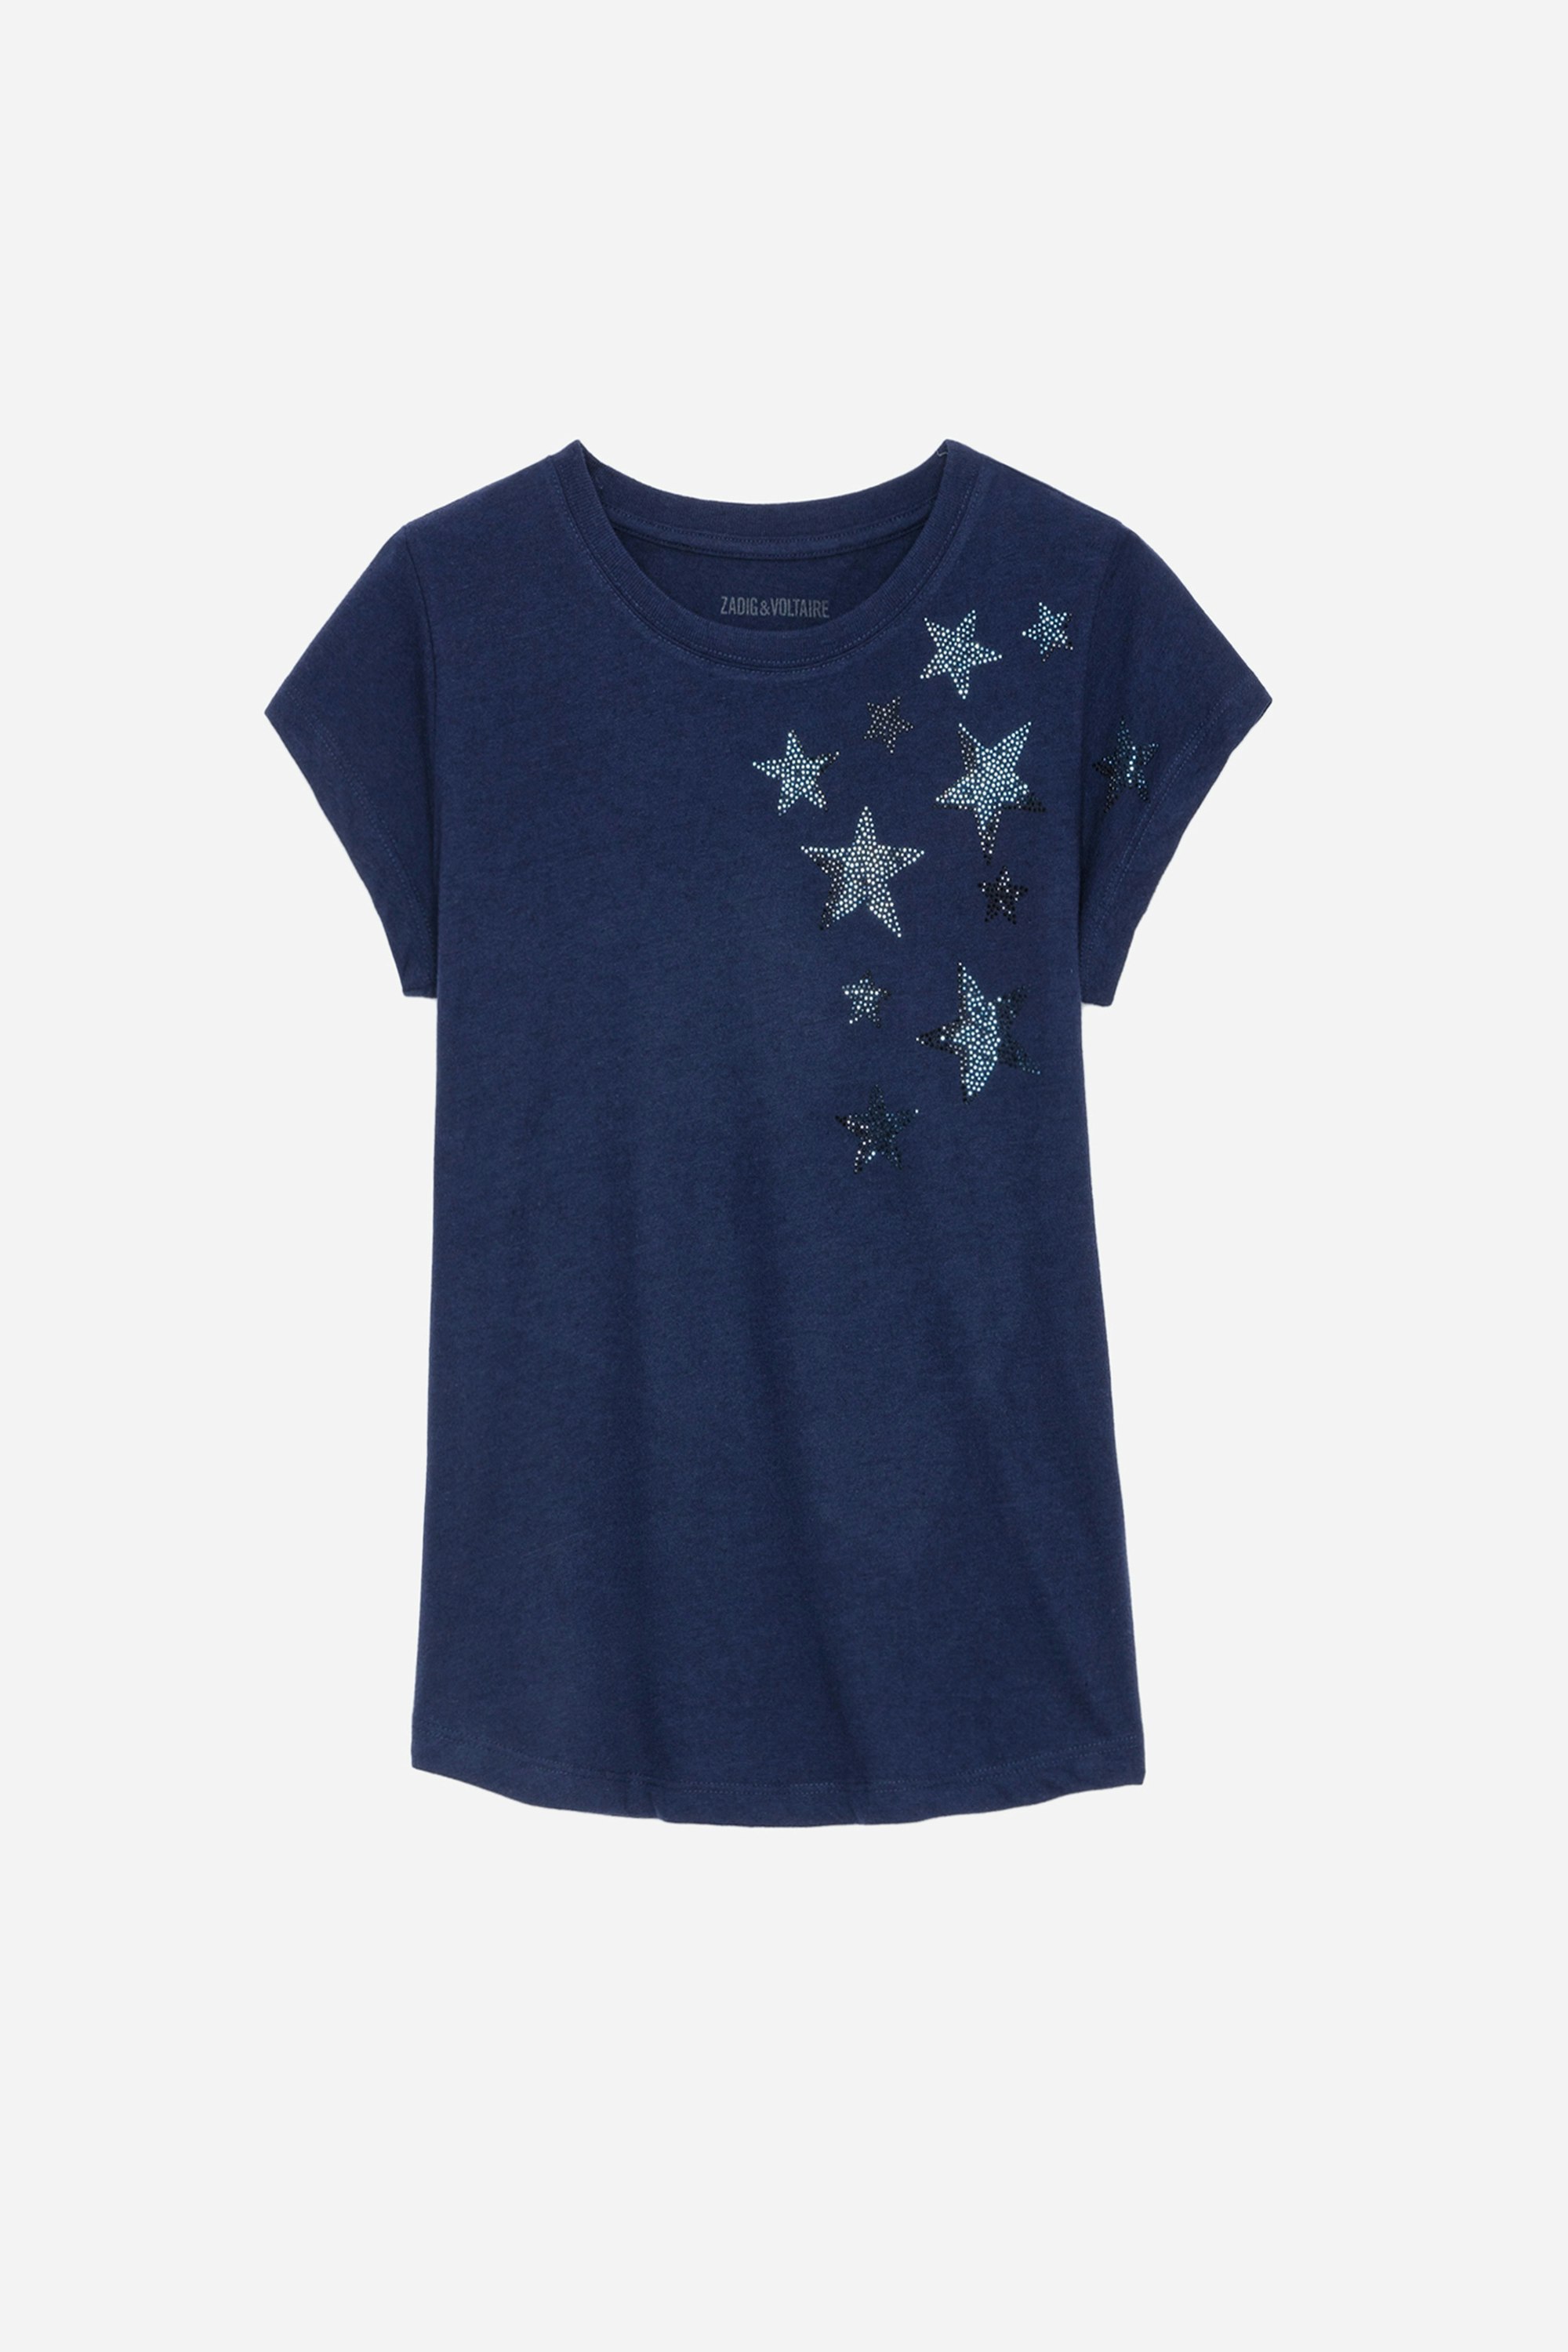 T-shirt Skinny Stars Strass - T-shirt bleu marine orné d'étoiles en strass.